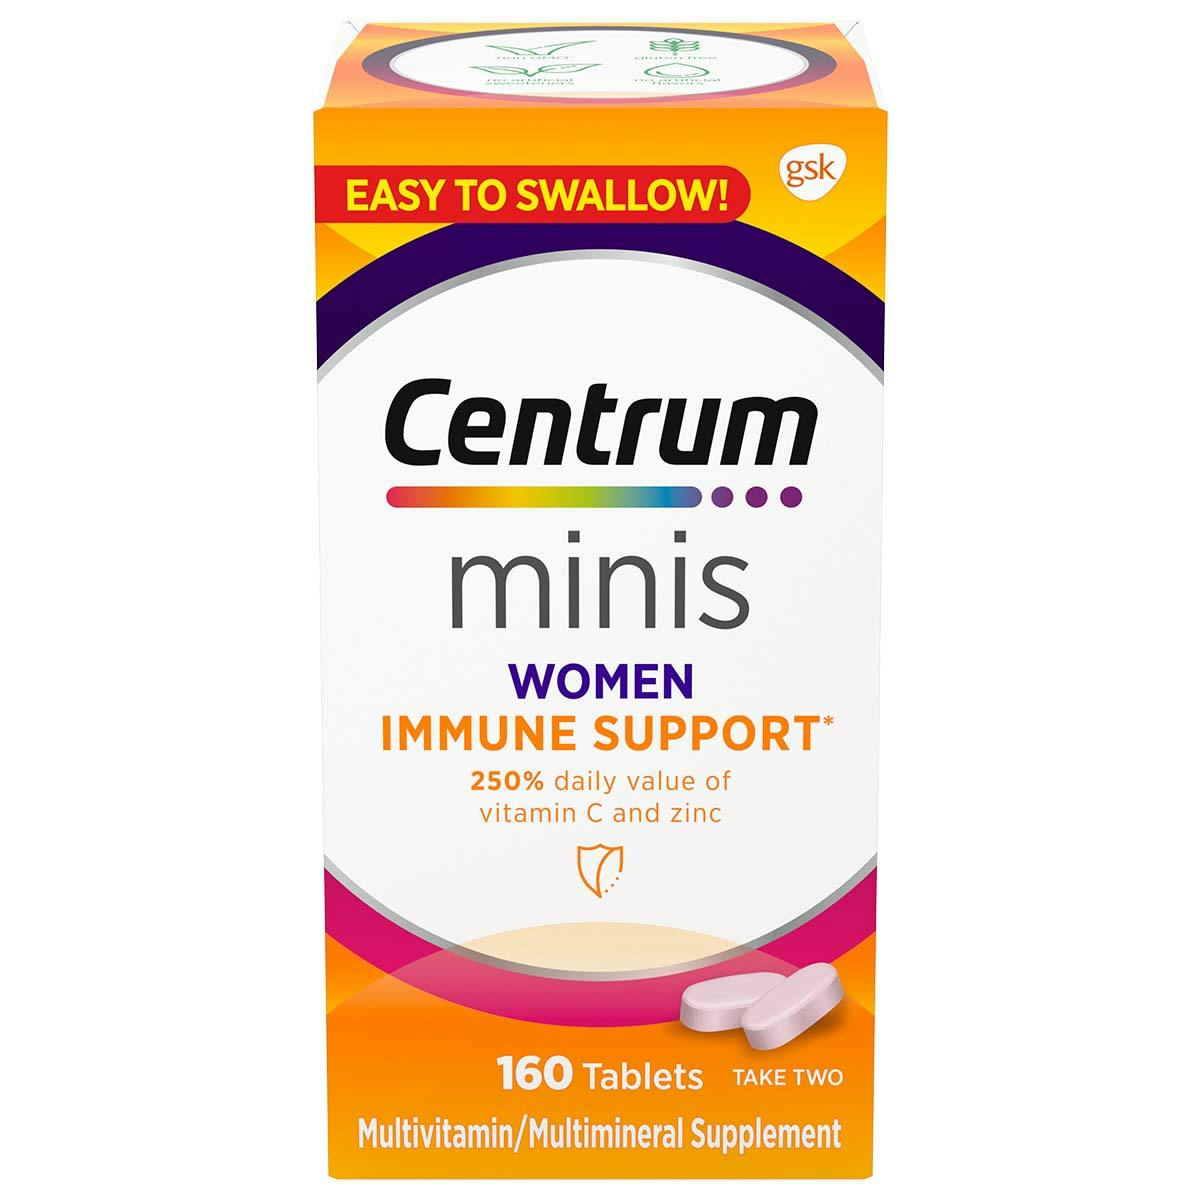 Box of Box of Centrum Minis Immune Support Women